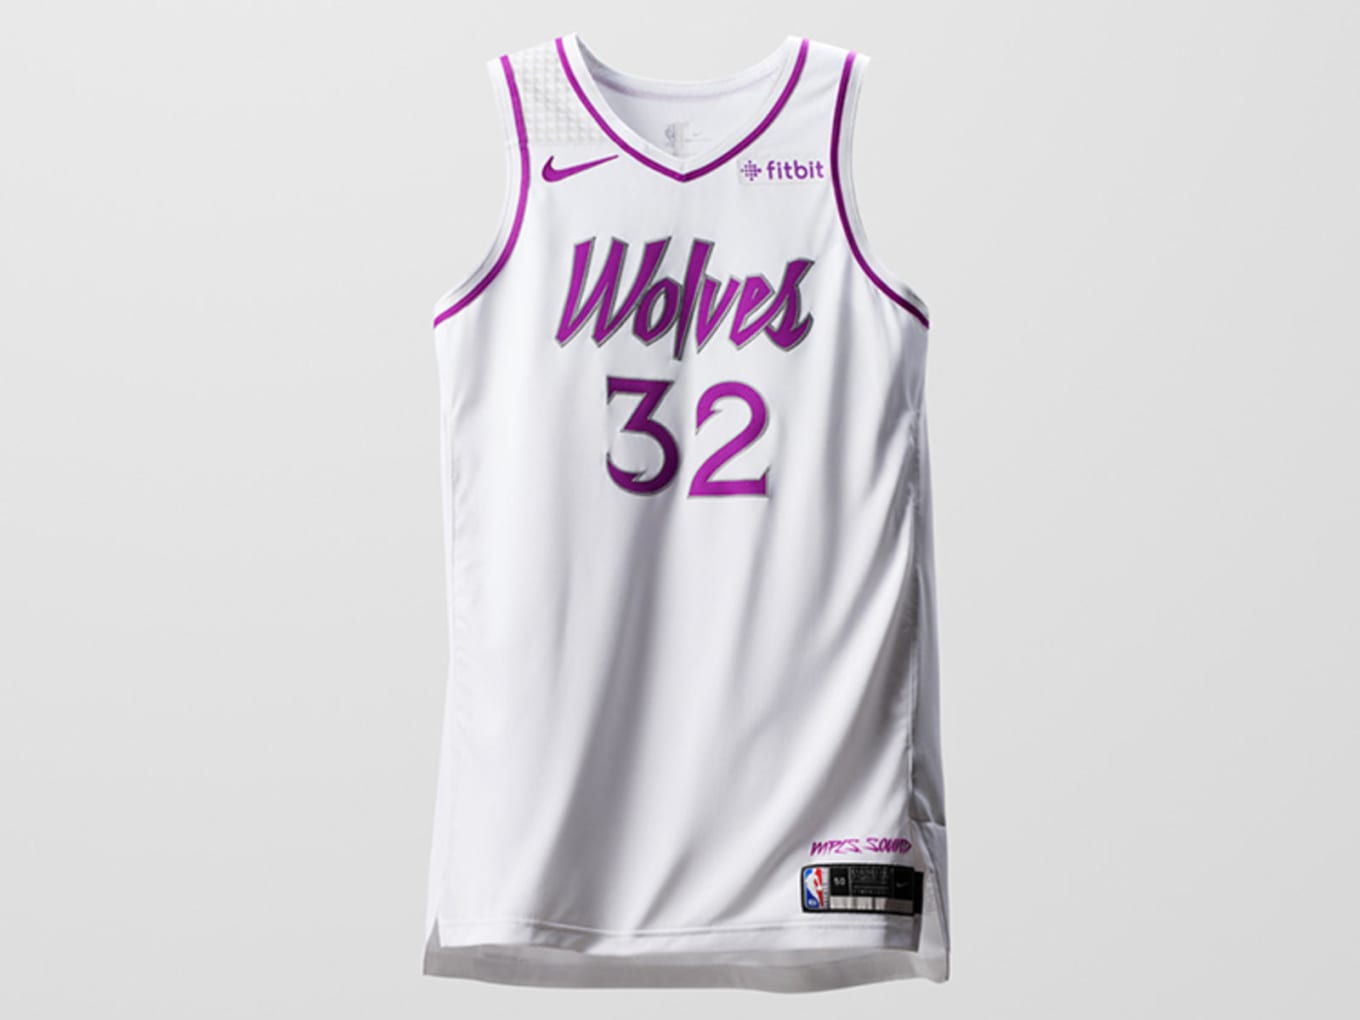 white and purple nba jersey